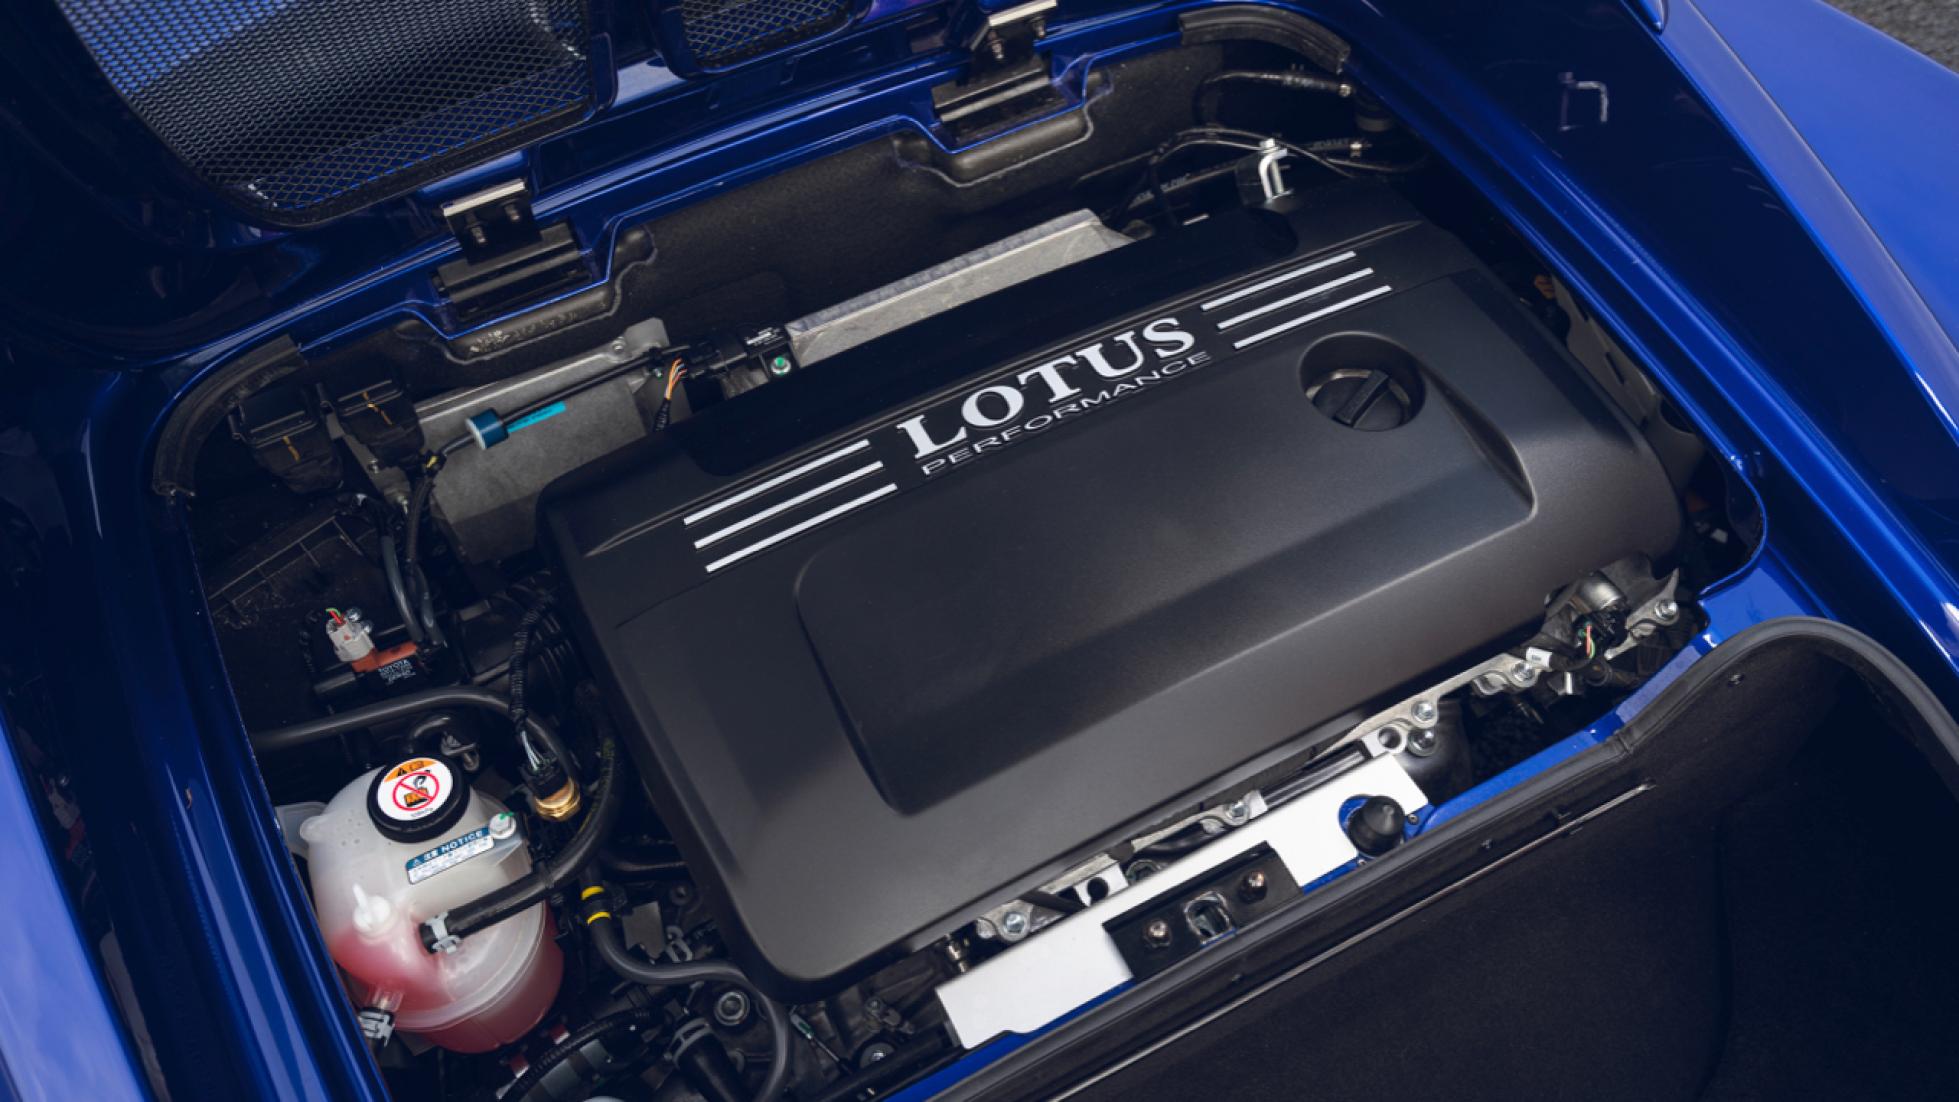 Lotus engine